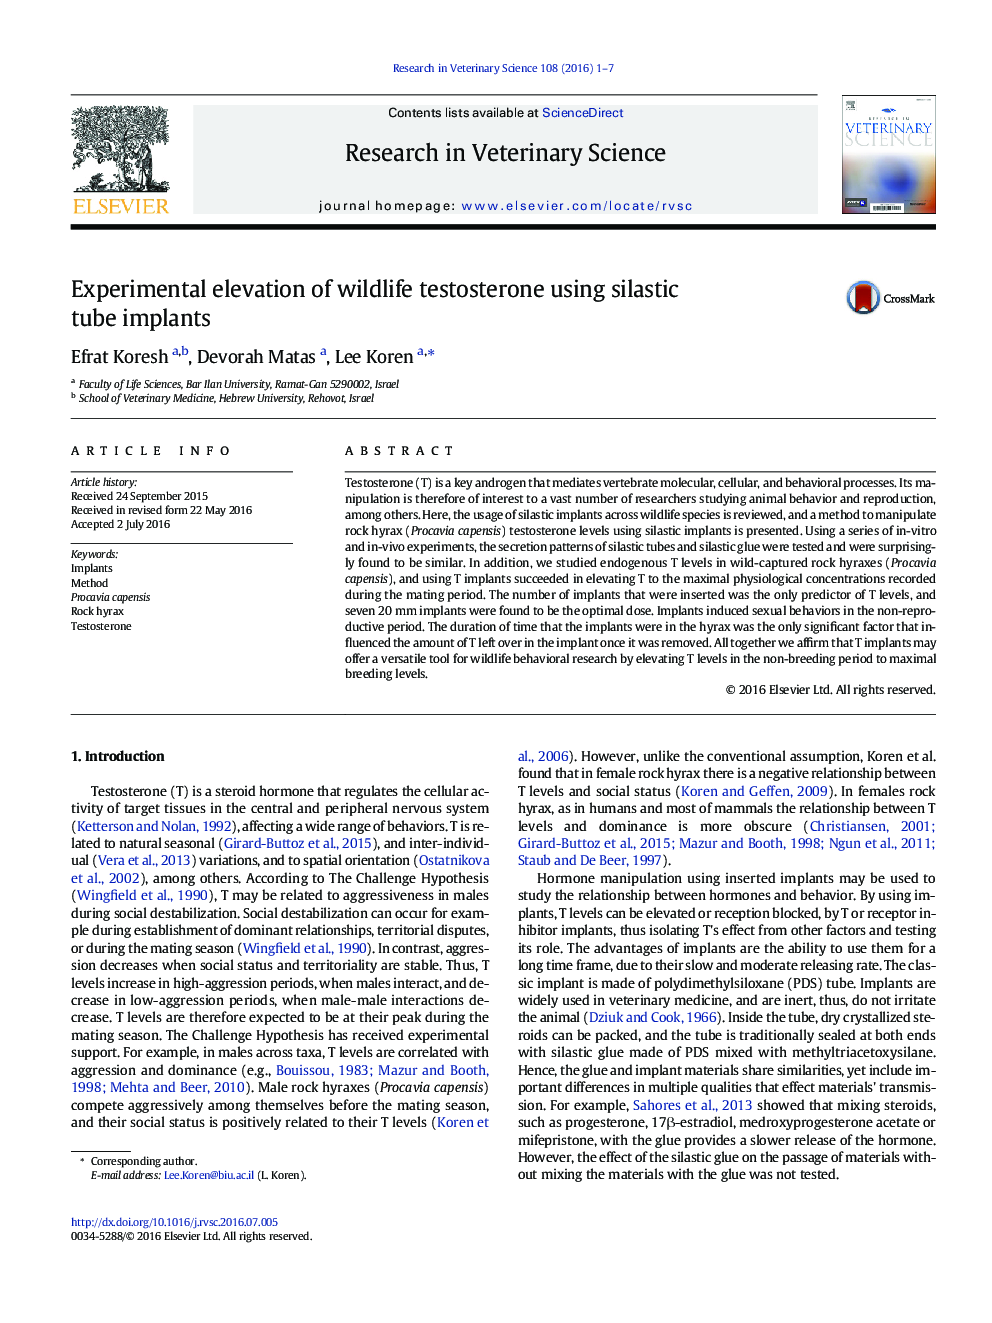 Experimental elevation of wildlife testosterone using silastic tube implants